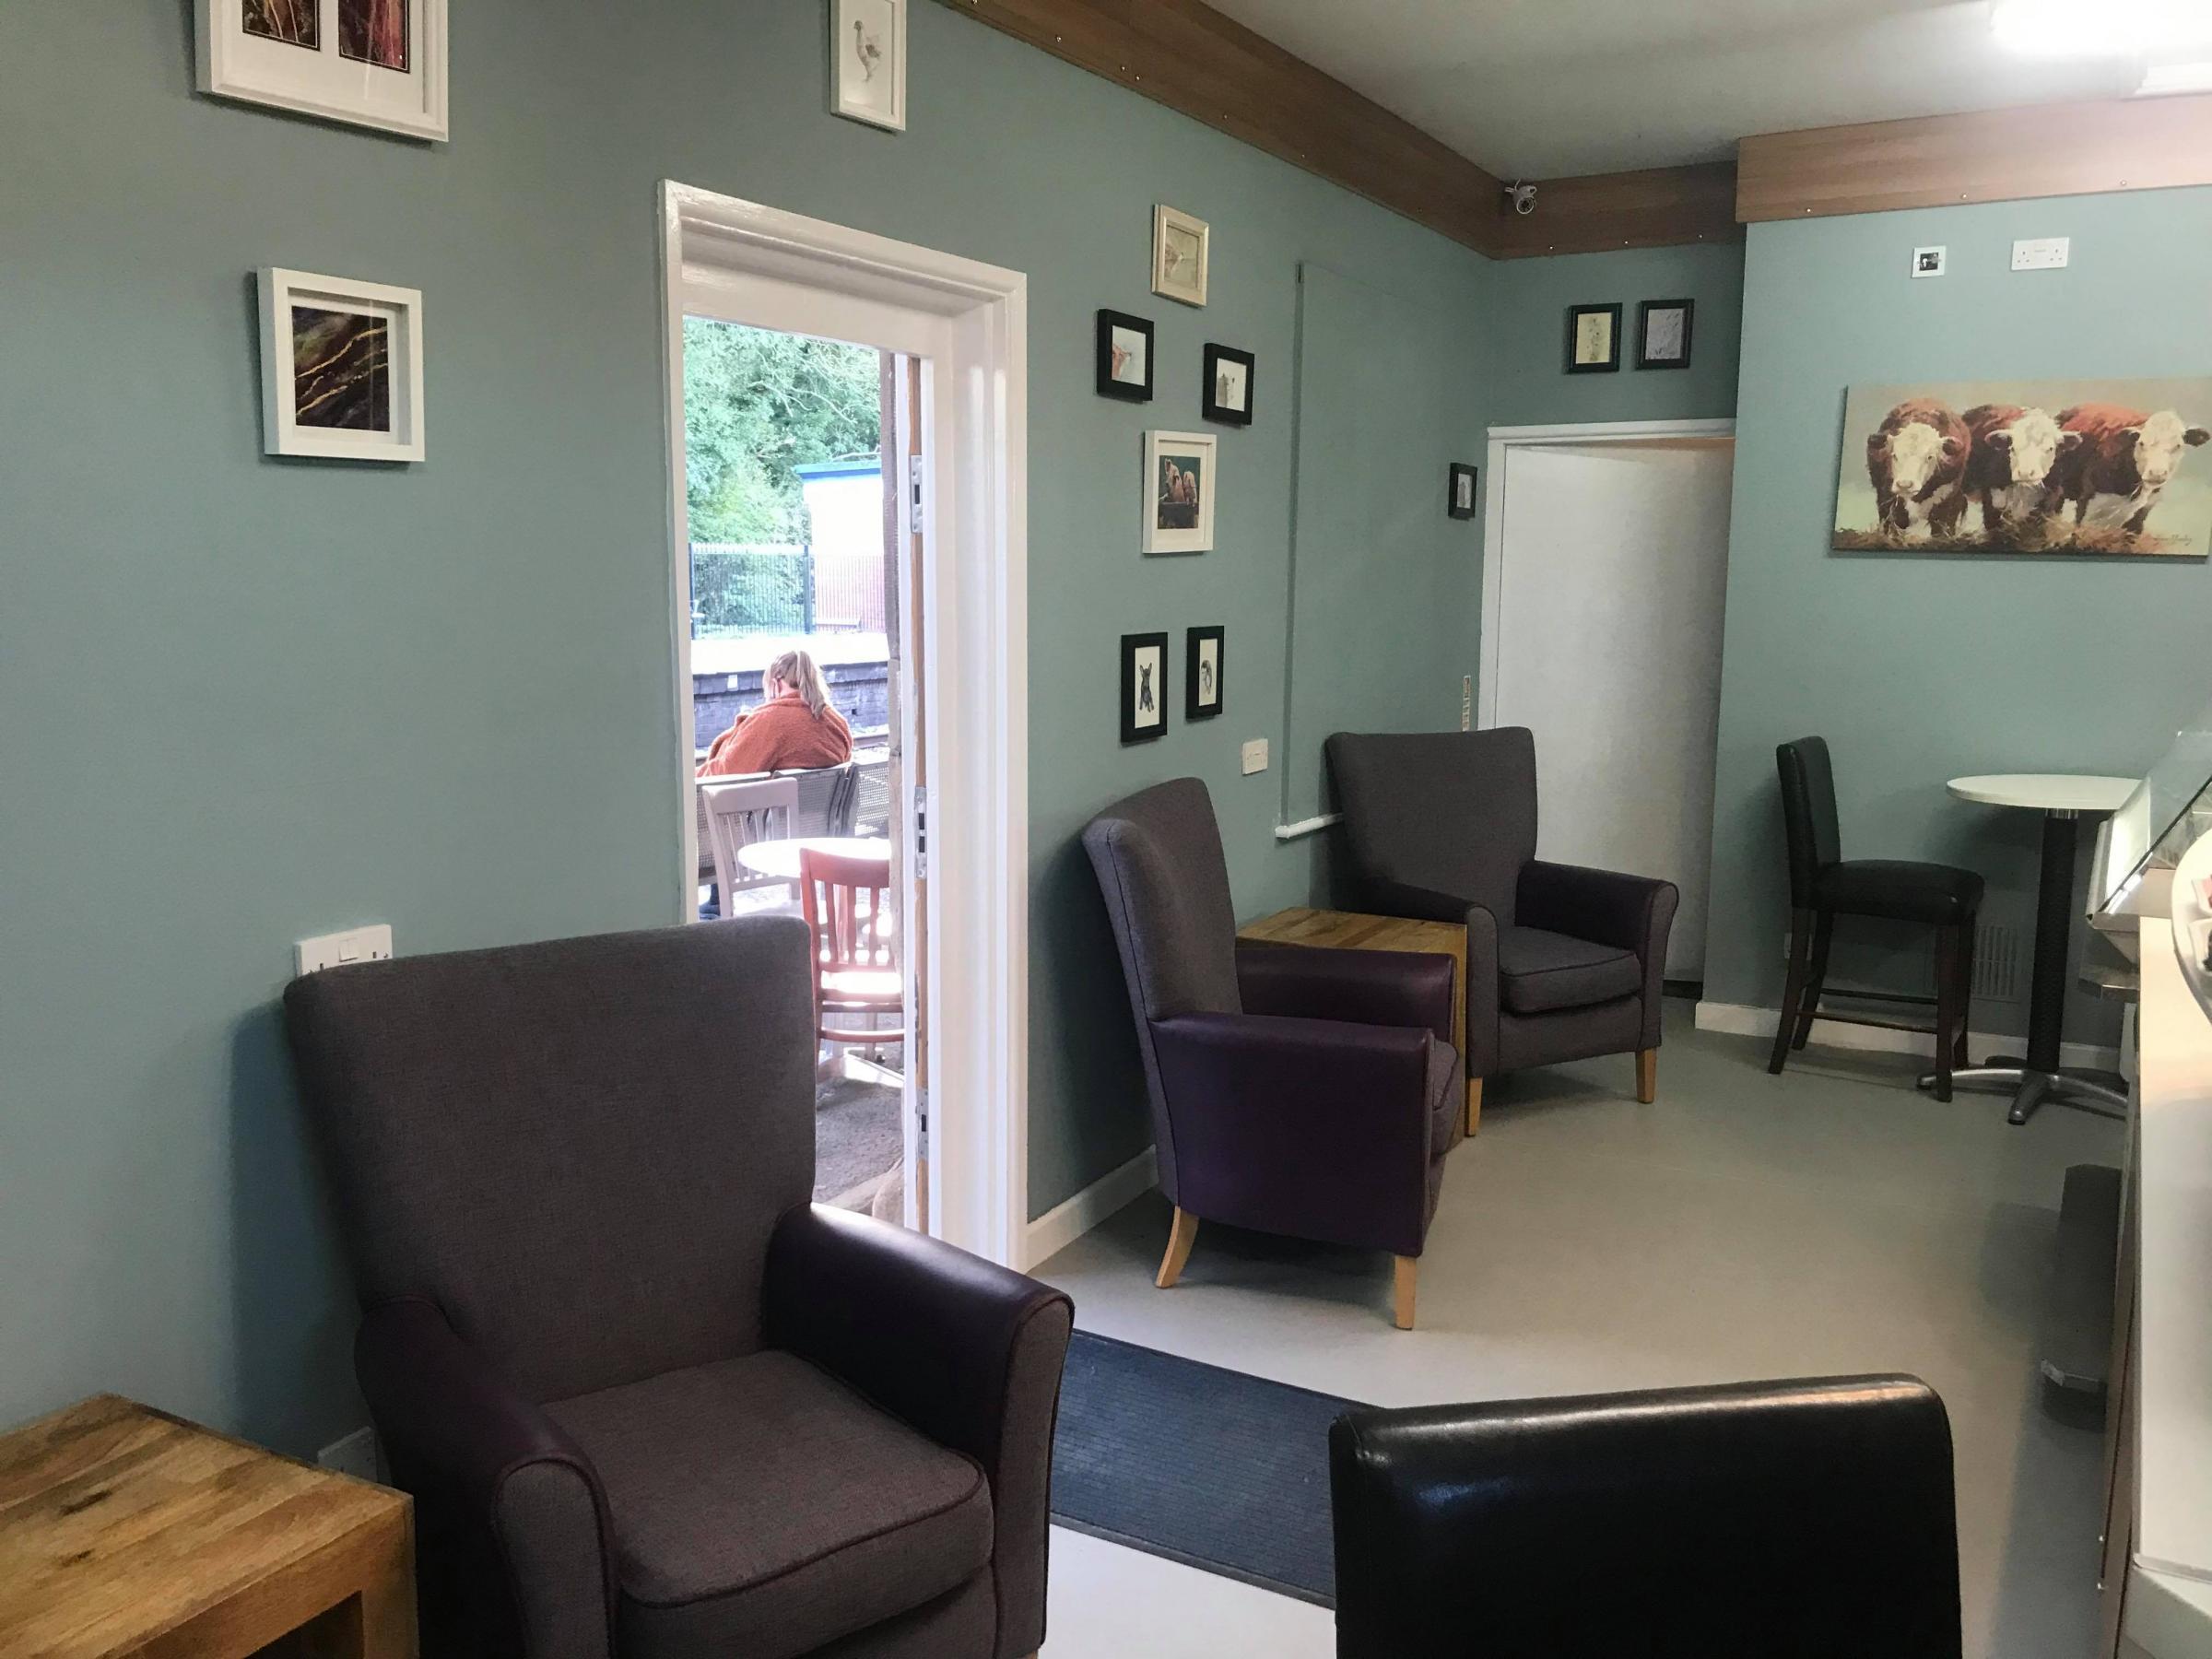 The café in Leominster follows previous Snugg Cafés in Ledbury and Bromyard